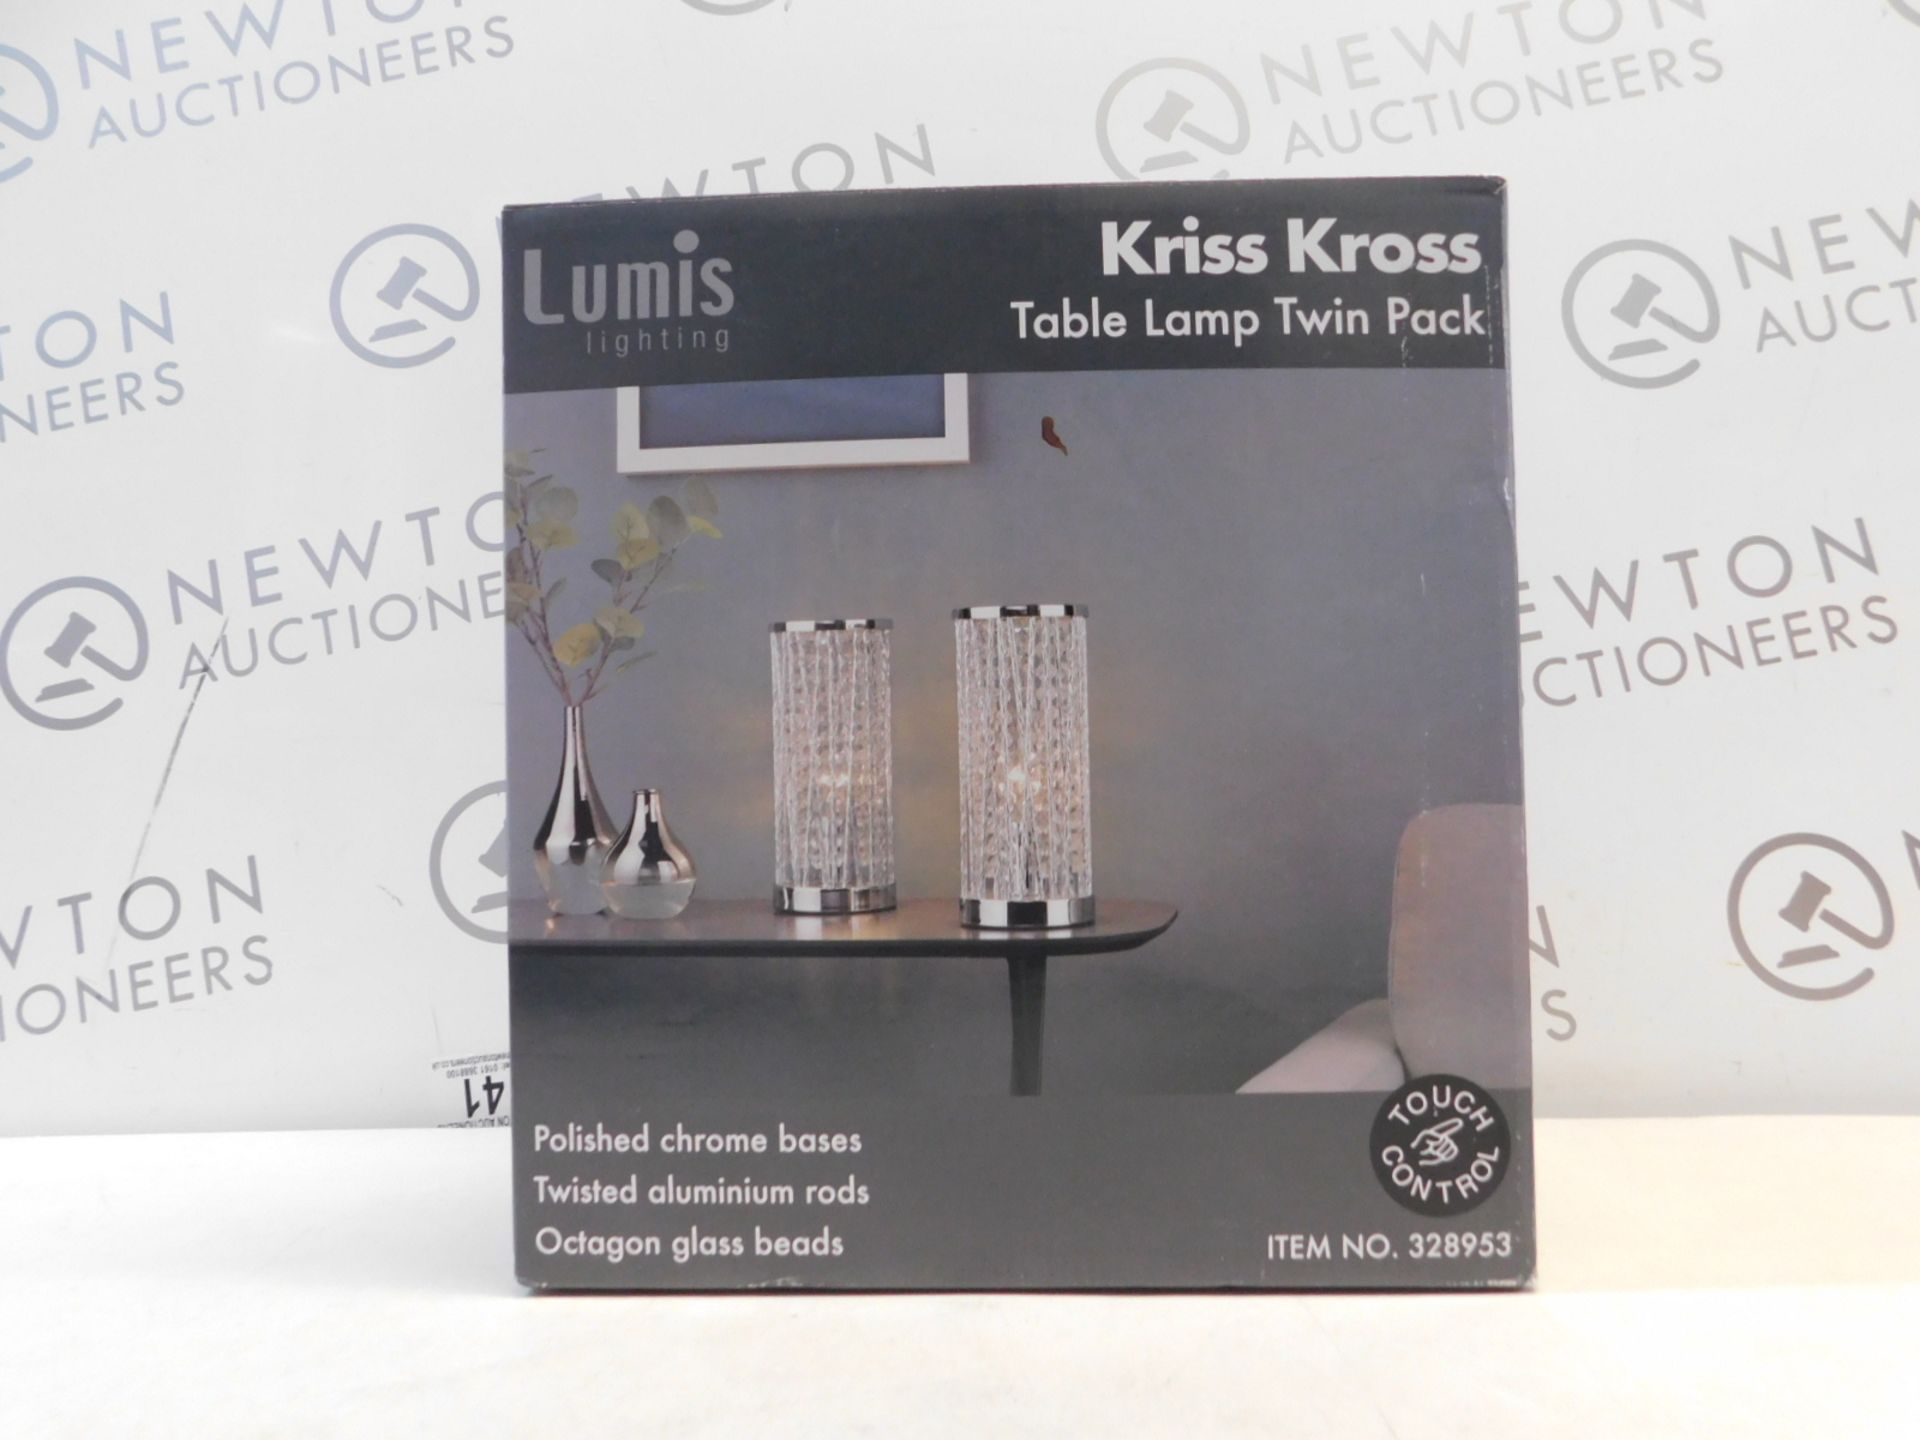 1 BOXED SET OF 2 LUMIS LIGHTING KRISS KROSS TABLE LAMPS RRP Â£39